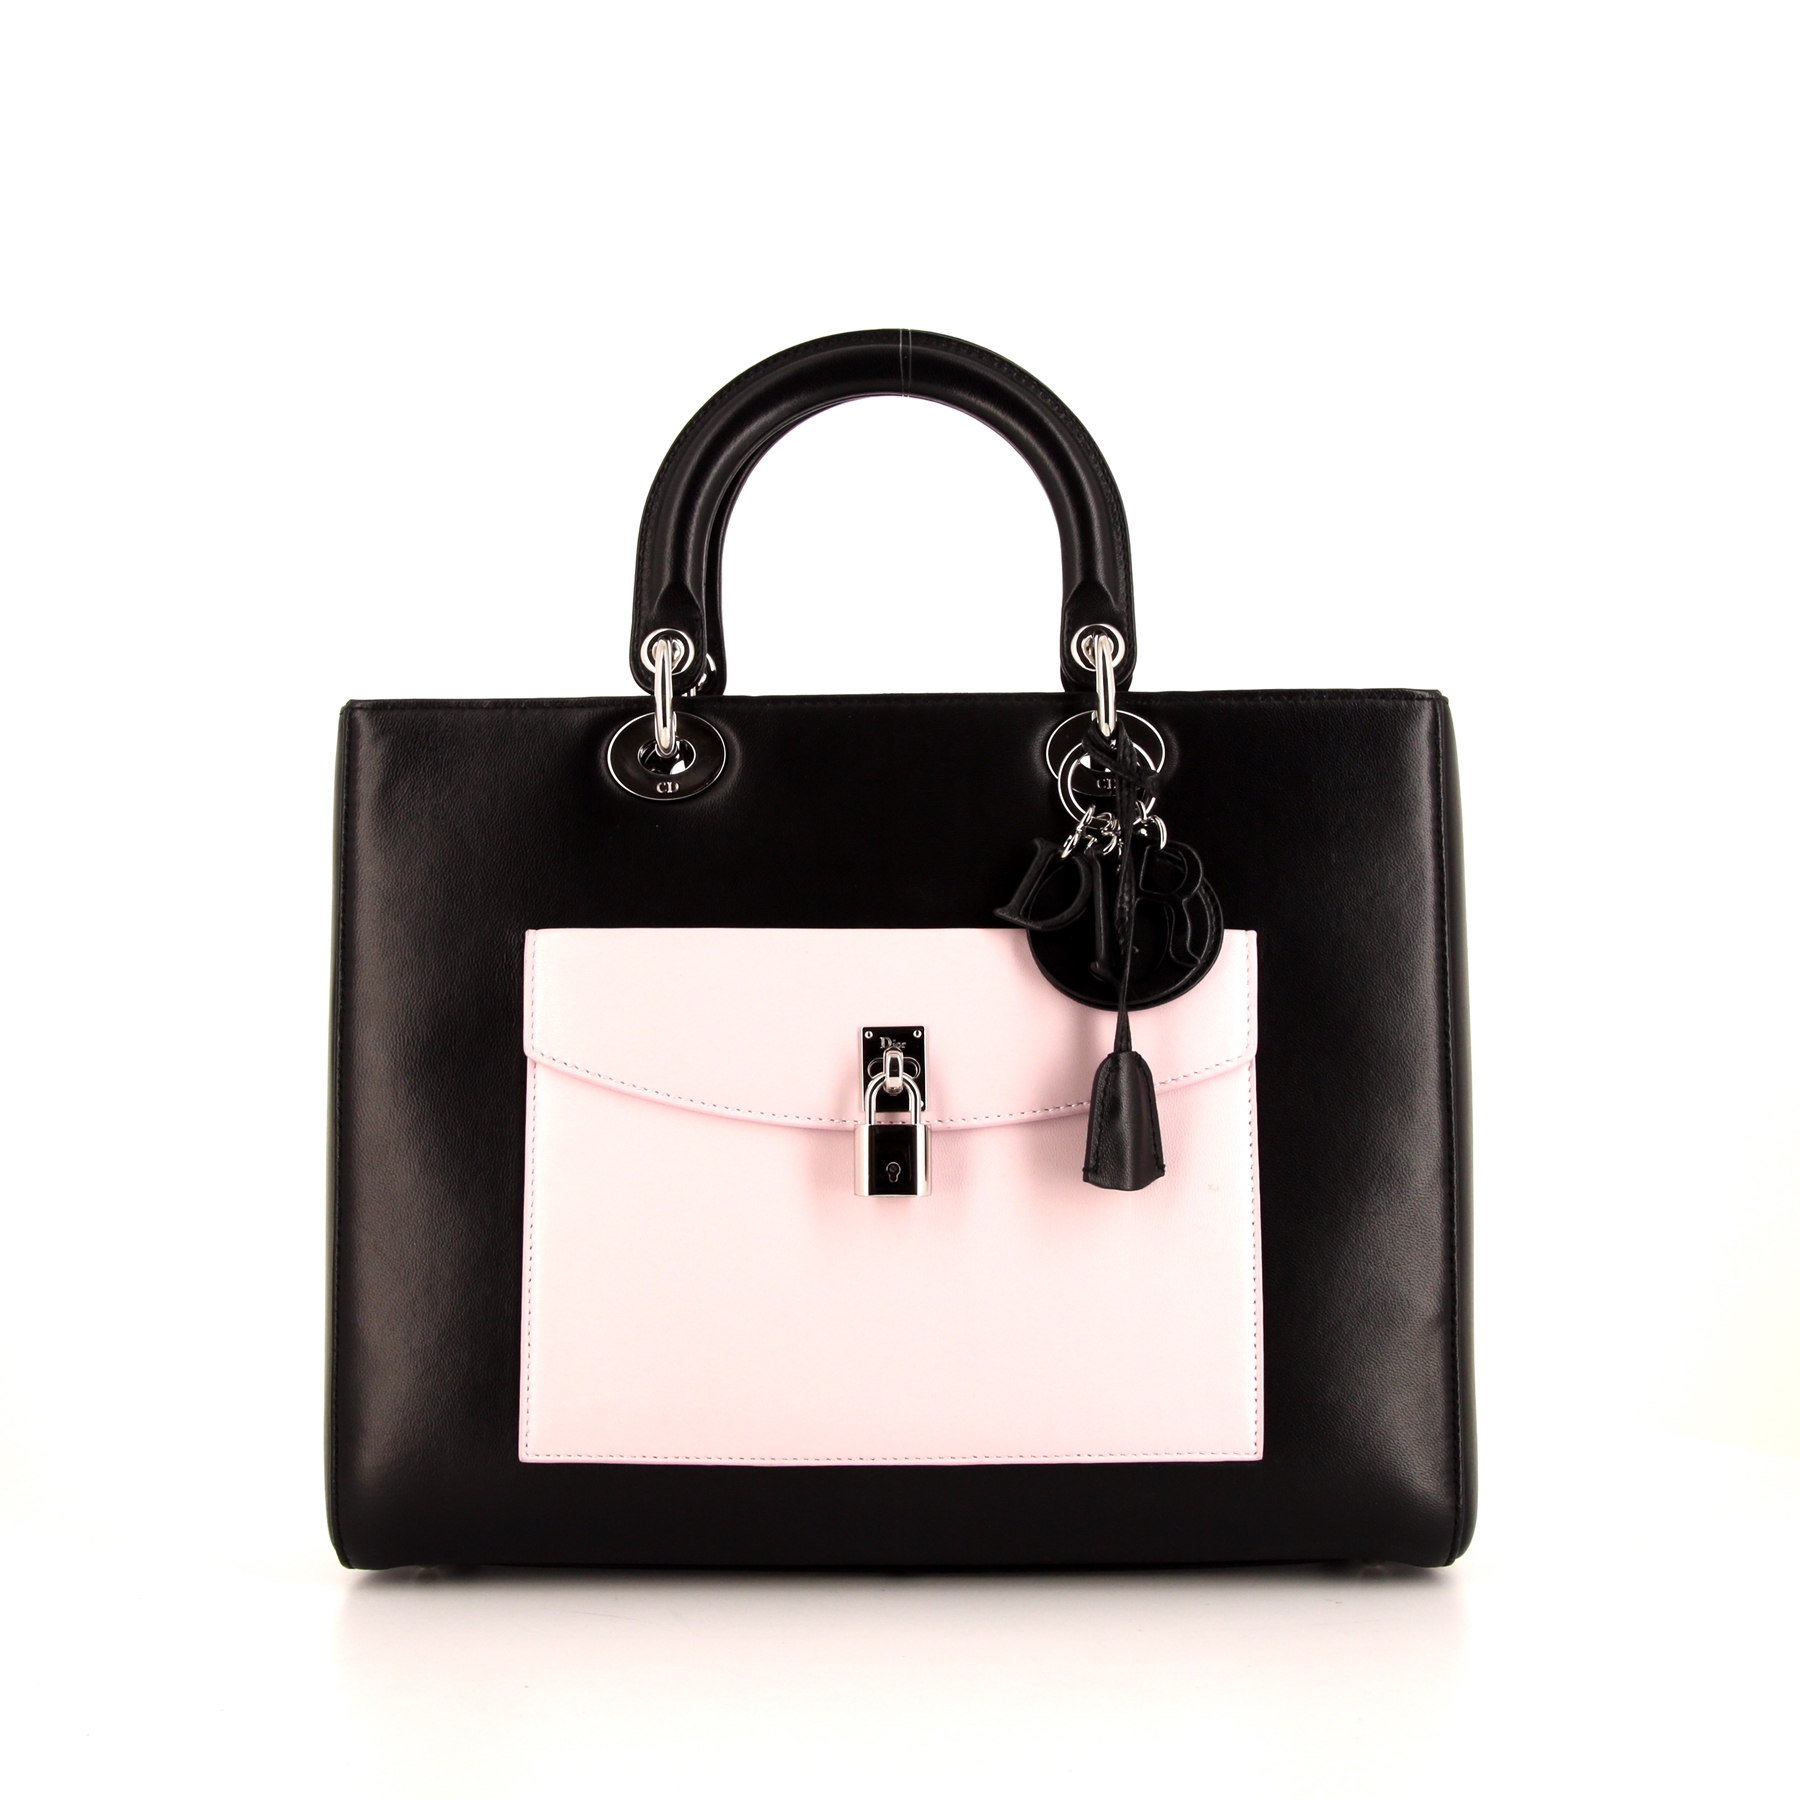 Lady Dior Edition Limitée Large Model Handbag In Black, Pink And